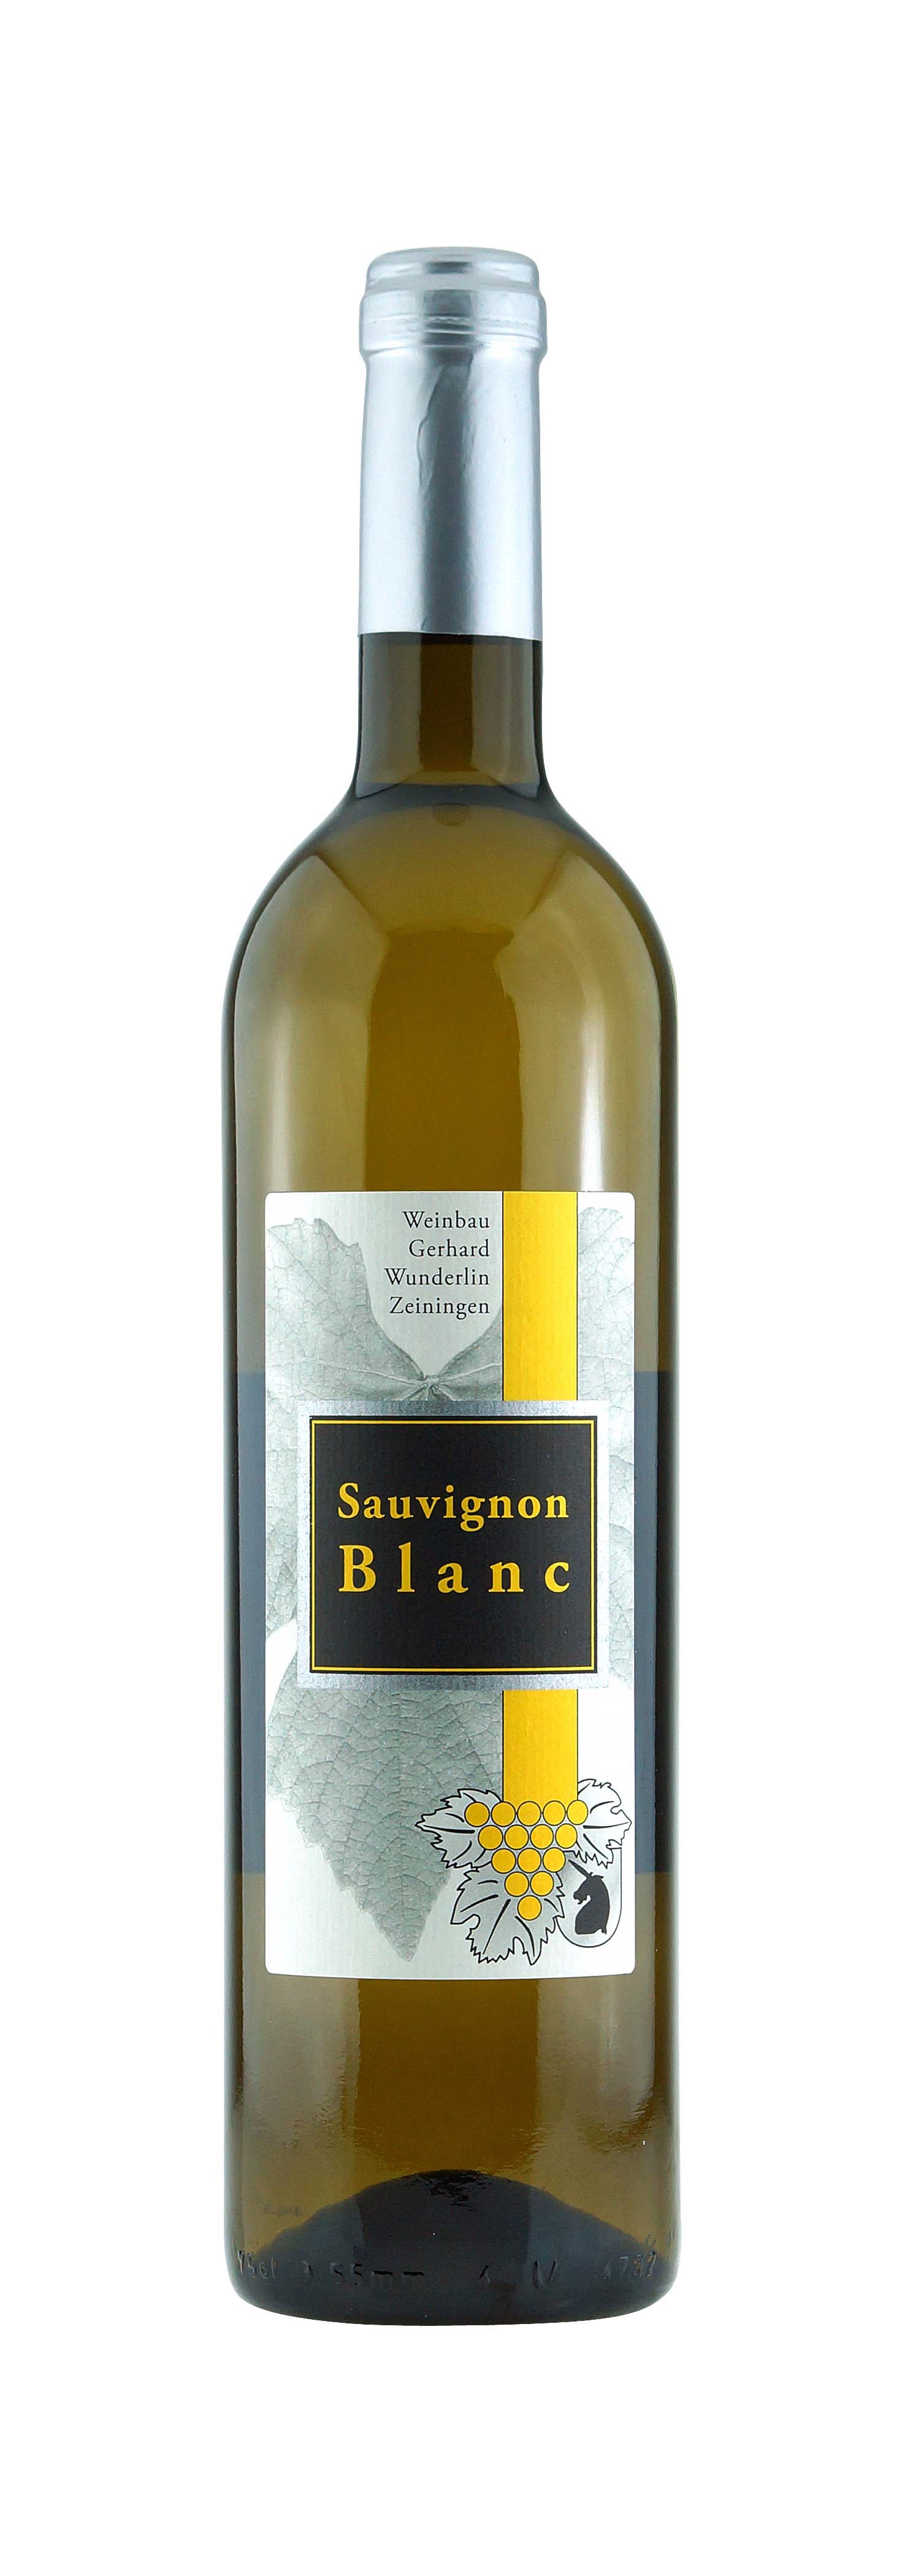 Aargau AOC Zeiningen Sauvignon Blanc 2015